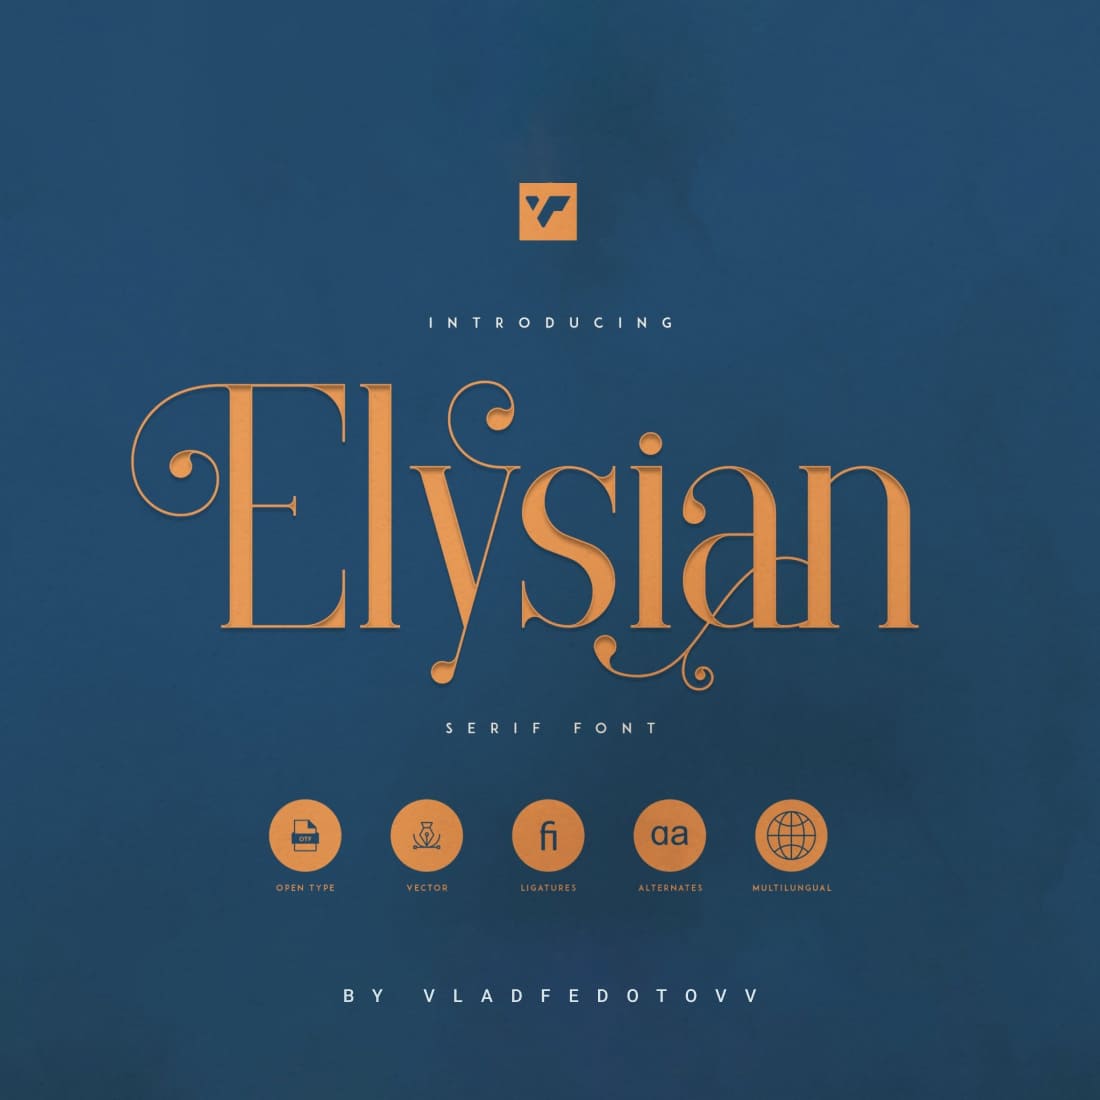 Elysian – Serif Font Cover image.